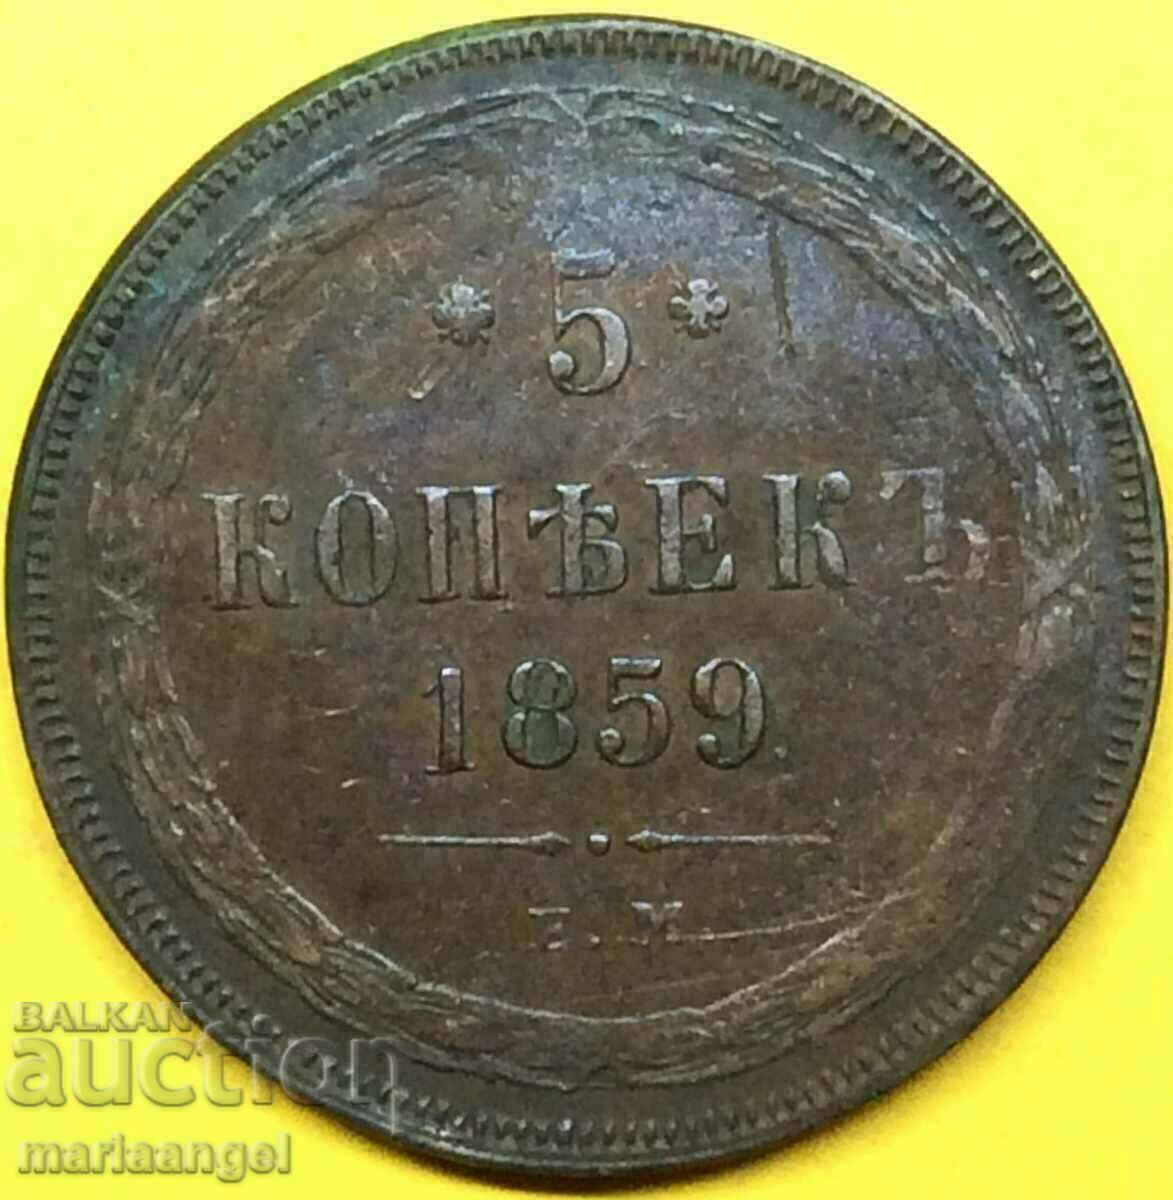 5 kopecks 1859 Russia 24.78g